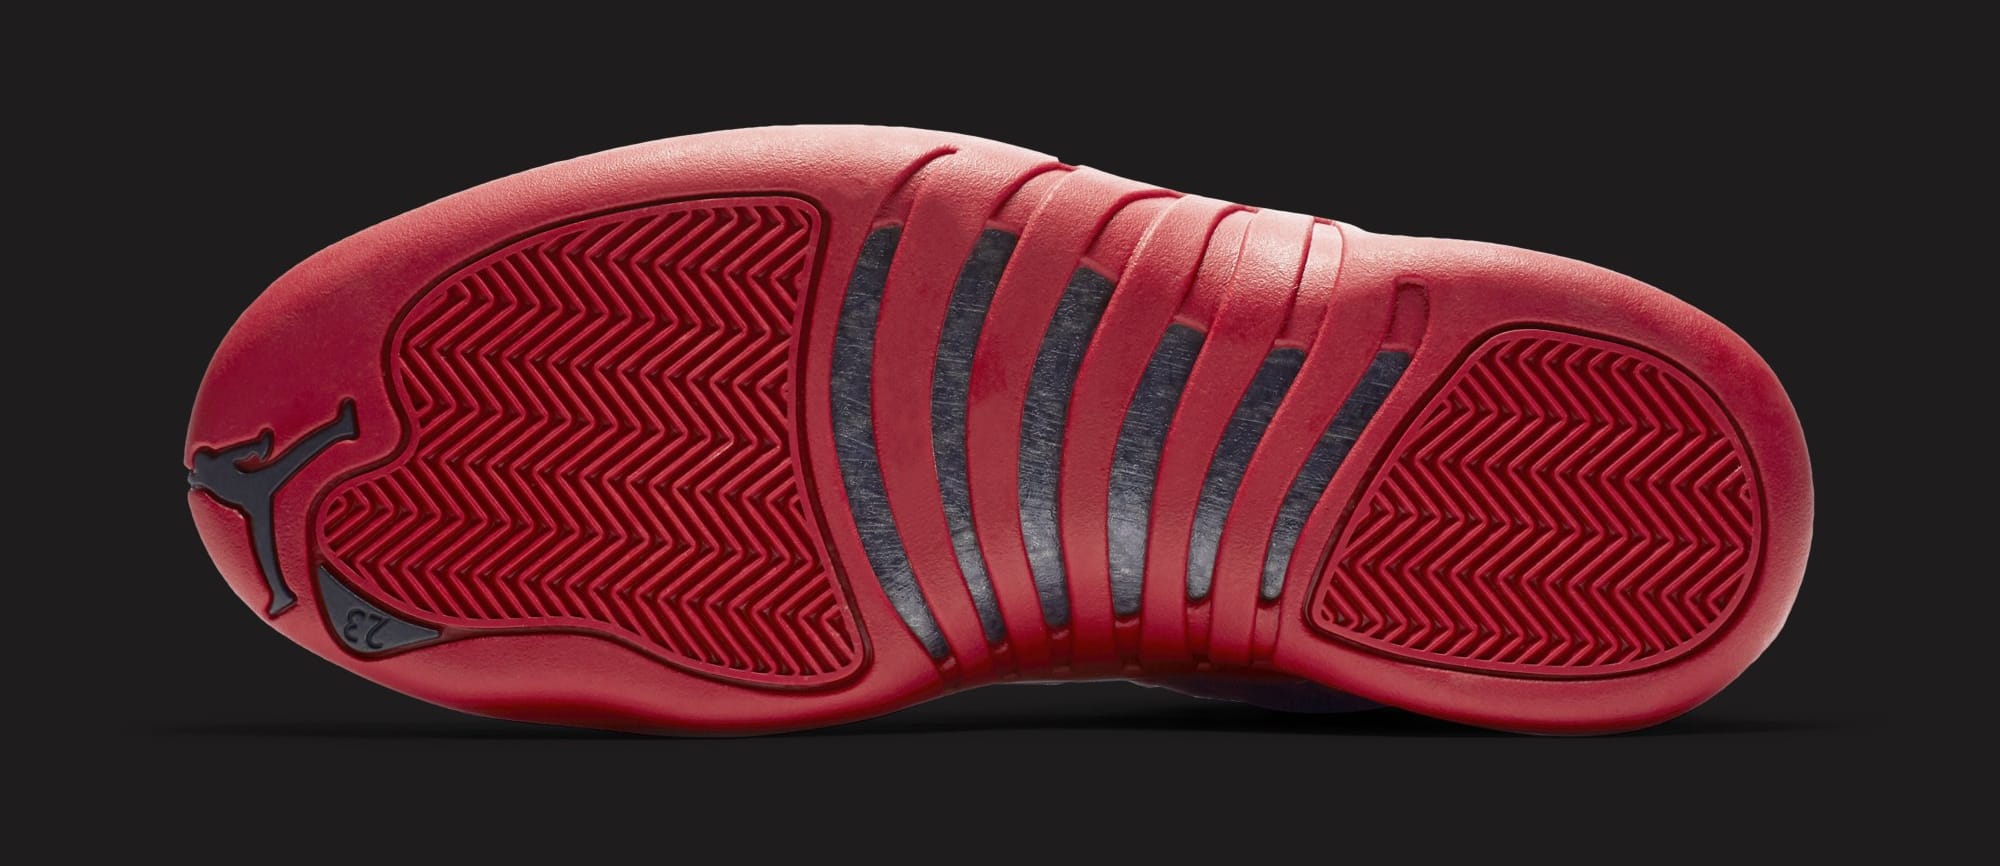 Air Jordan 12 &#x27;Gym Red&#x27; 130690-601 (Bottom)